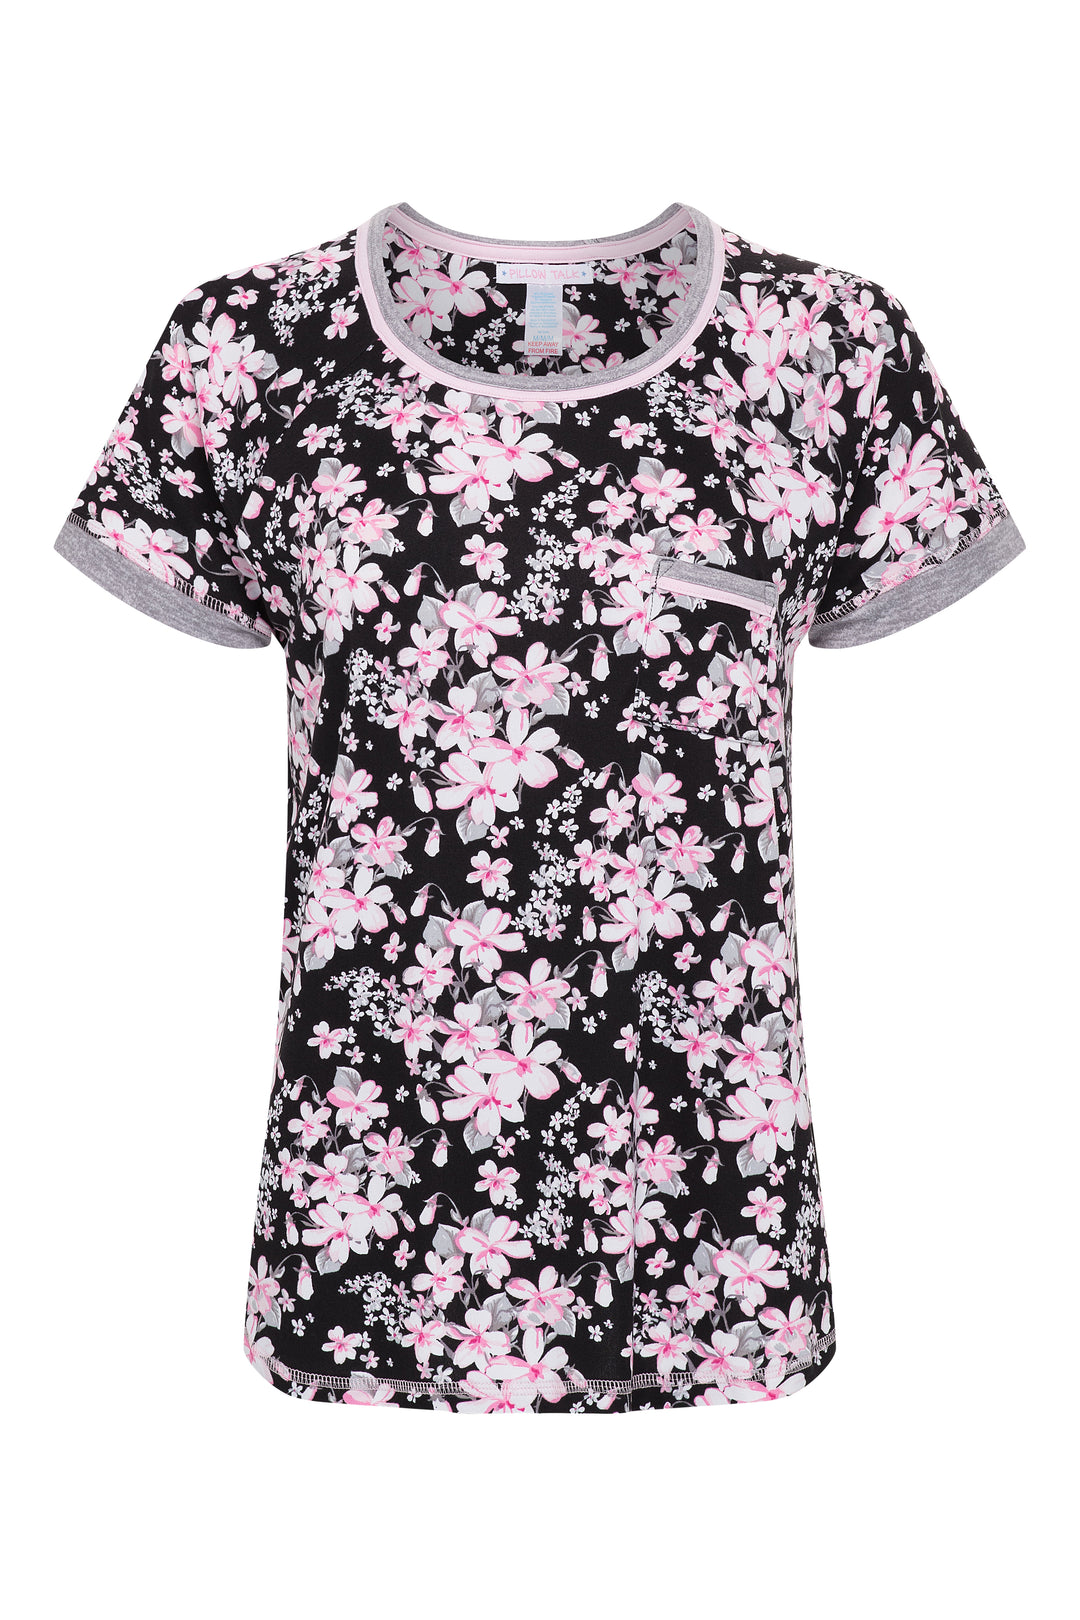 Floral patterned t-shirt as part of the René Rofé 2 Pack Lightweight Short Set